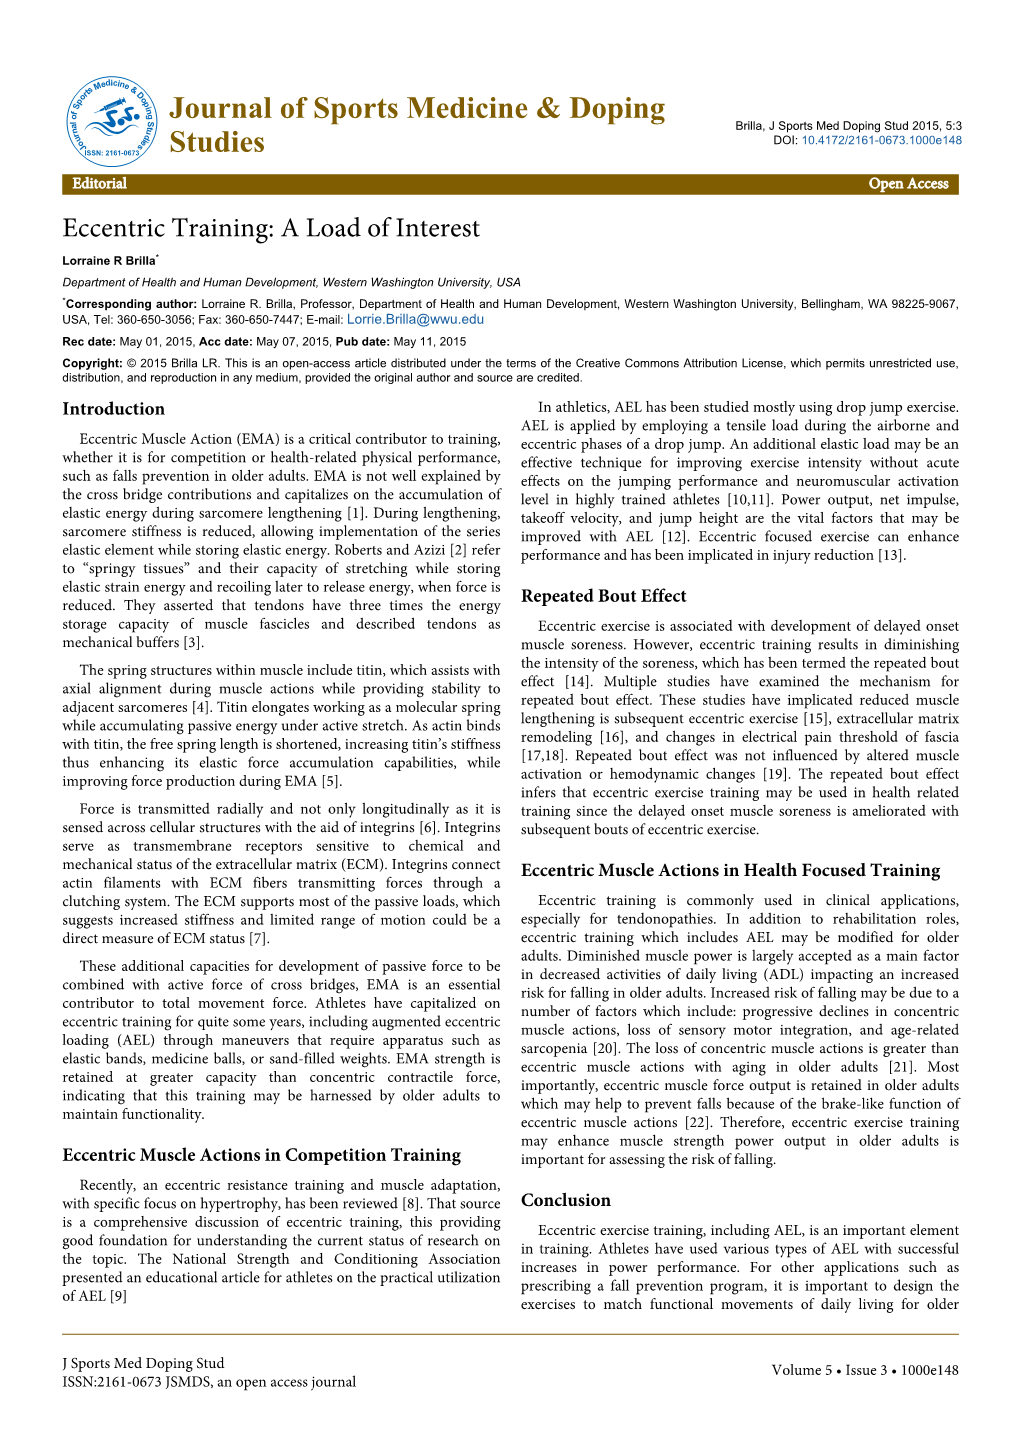 Eccentric Training: a Load of Interest